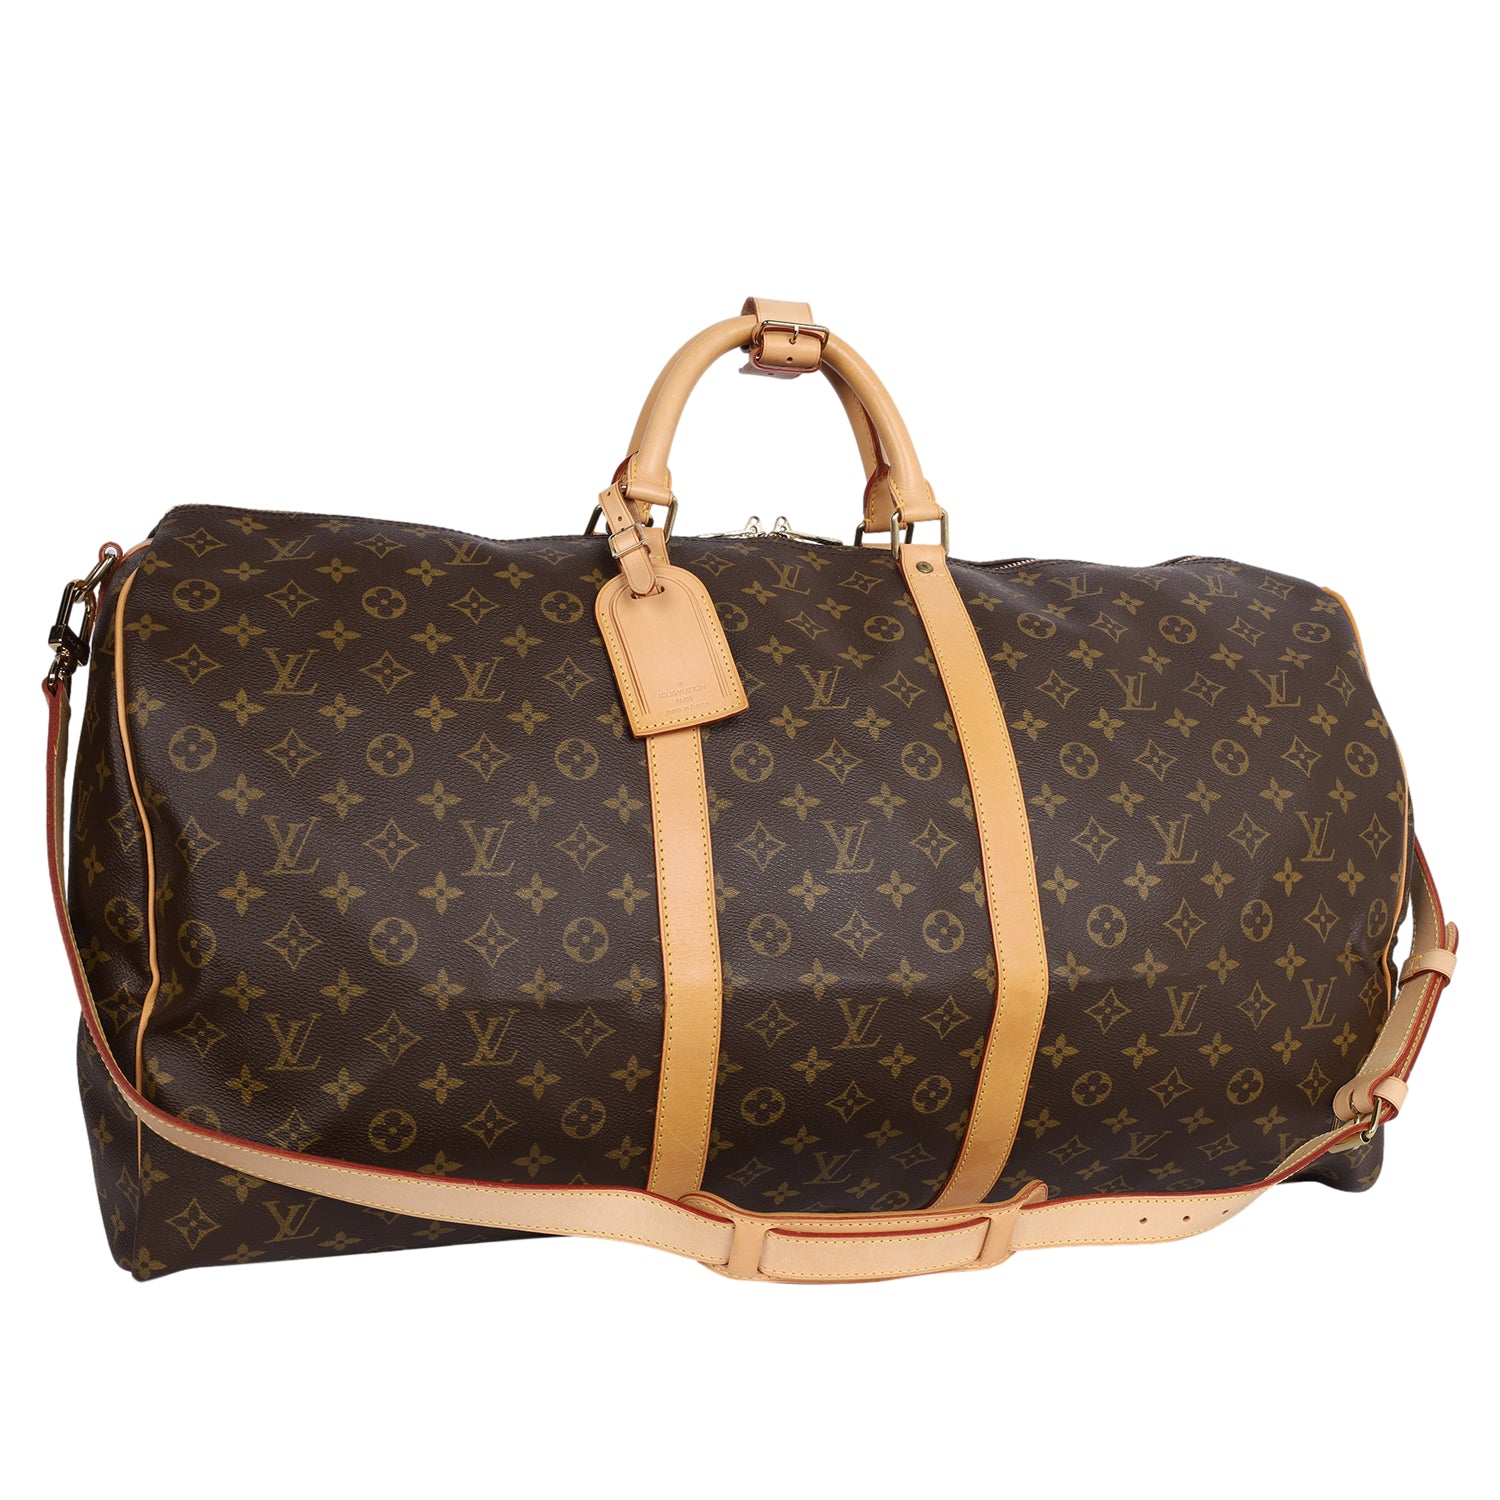 Authentic Louis Vuitton Monogram Keepall bandouliere 60 hand/travel bag